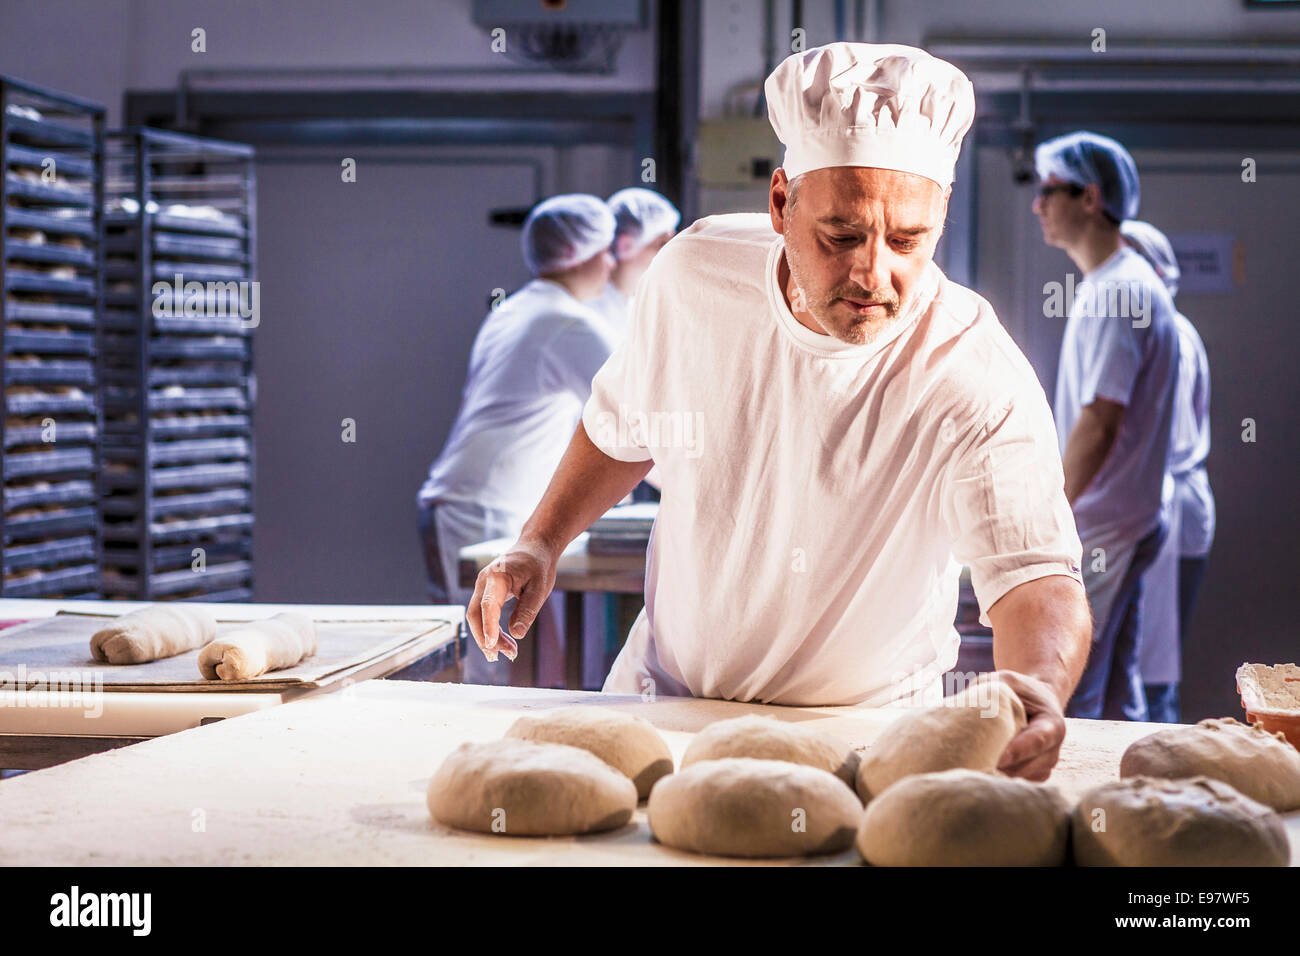 Baking bread, chef controlling dough Stock Photo